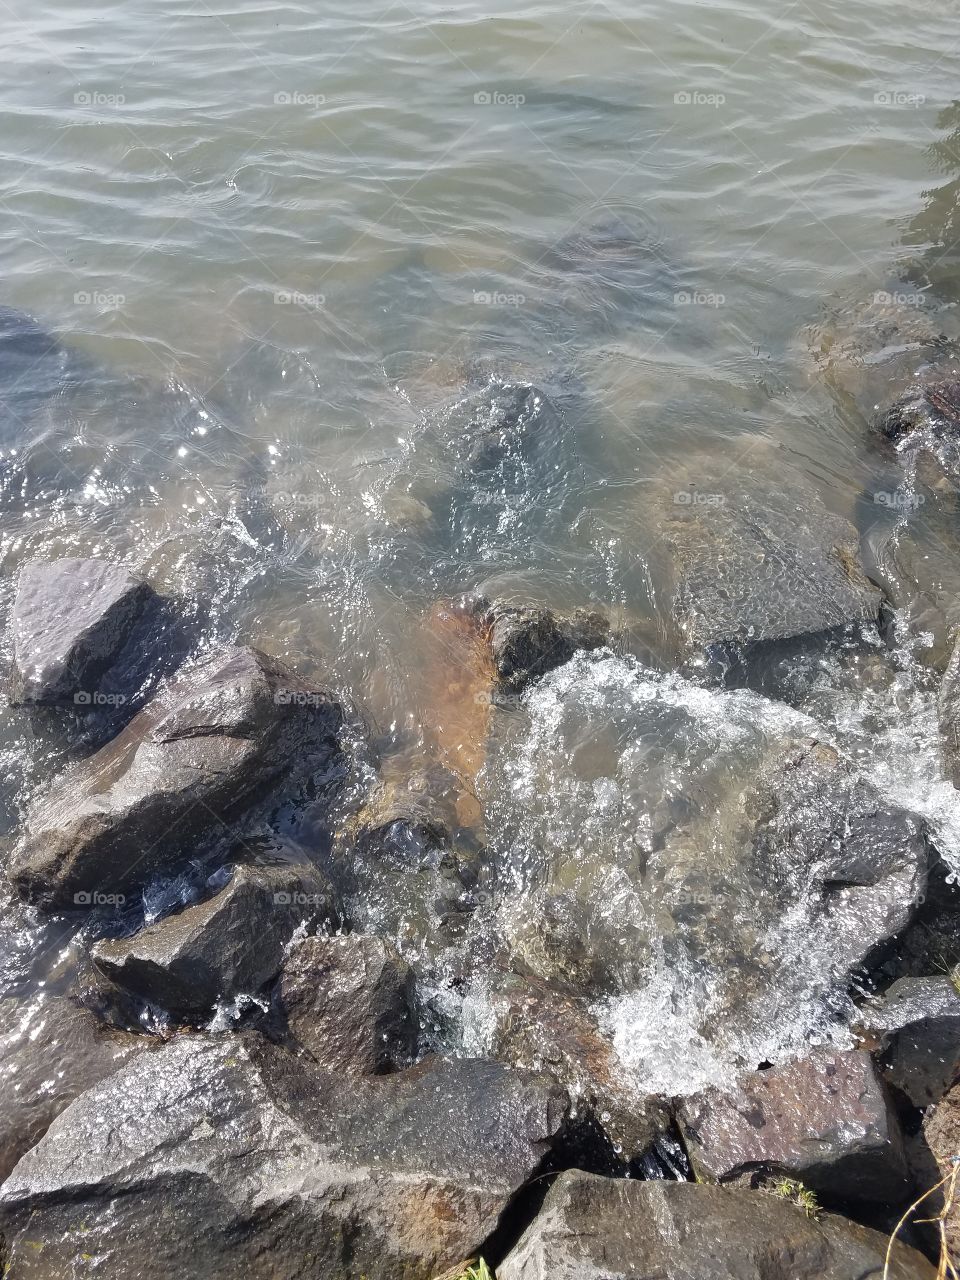 Minimalistic Snaps water
Rocks River